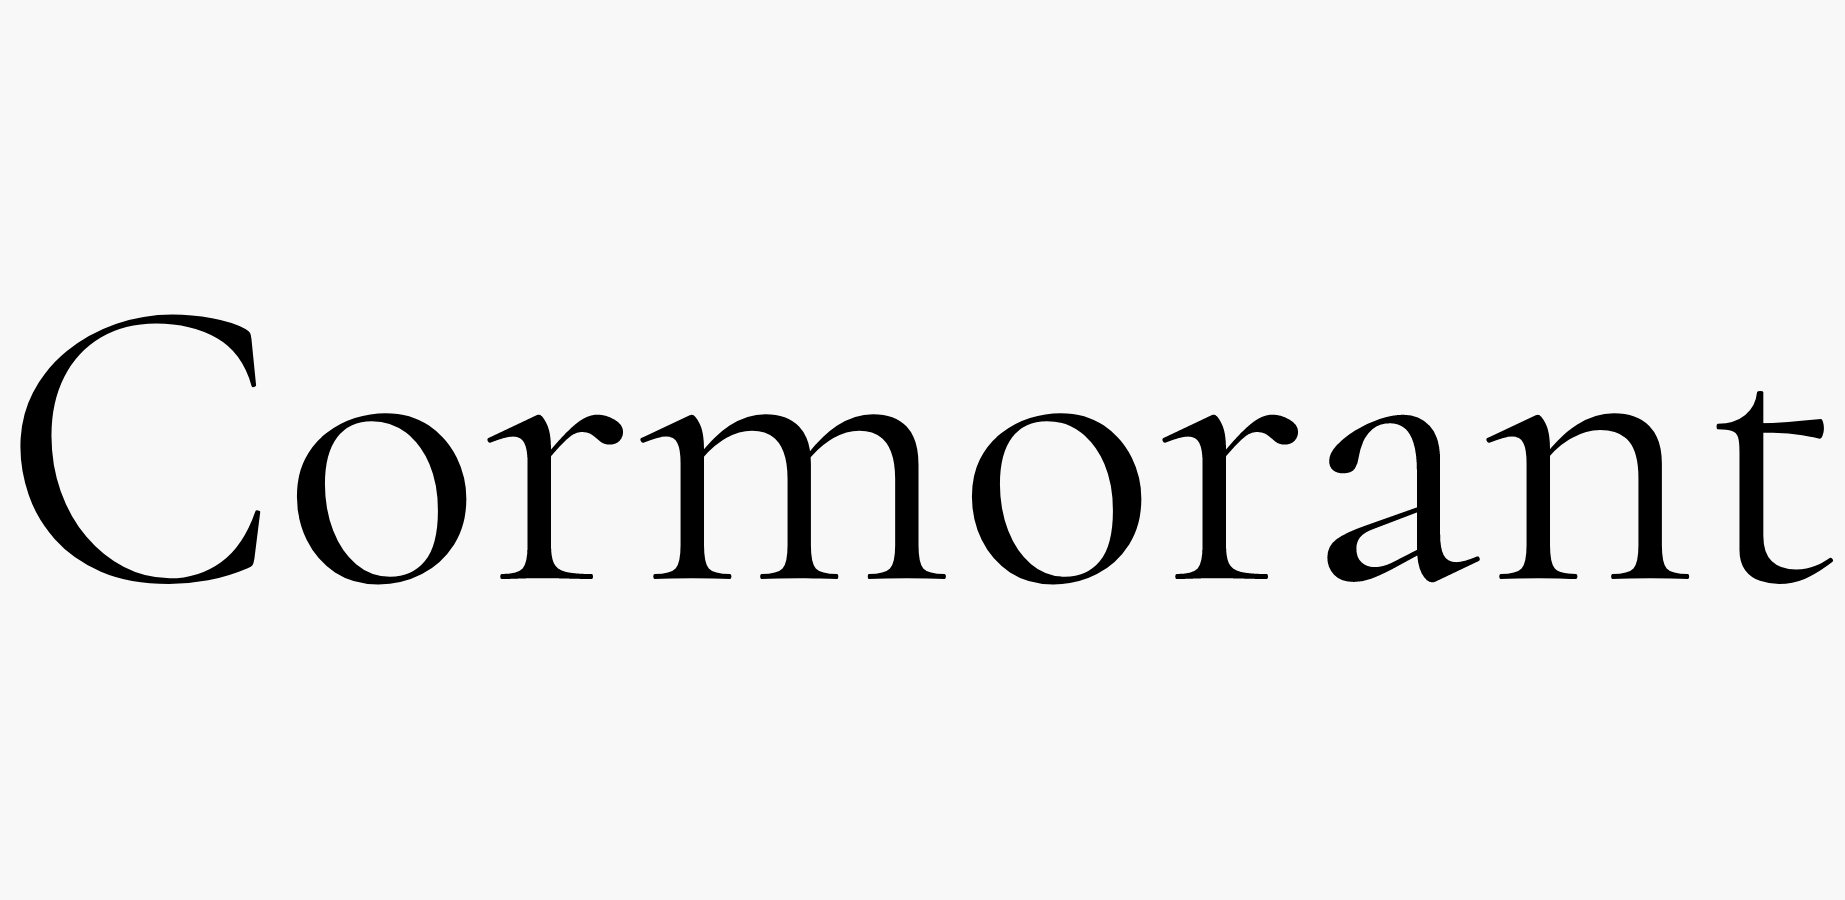 Шрифт cormorant garamond. Cormorant шрифт. Cormorant Garamond. Шрифт Cormorant SC. Cormorant Garamond кириллица.